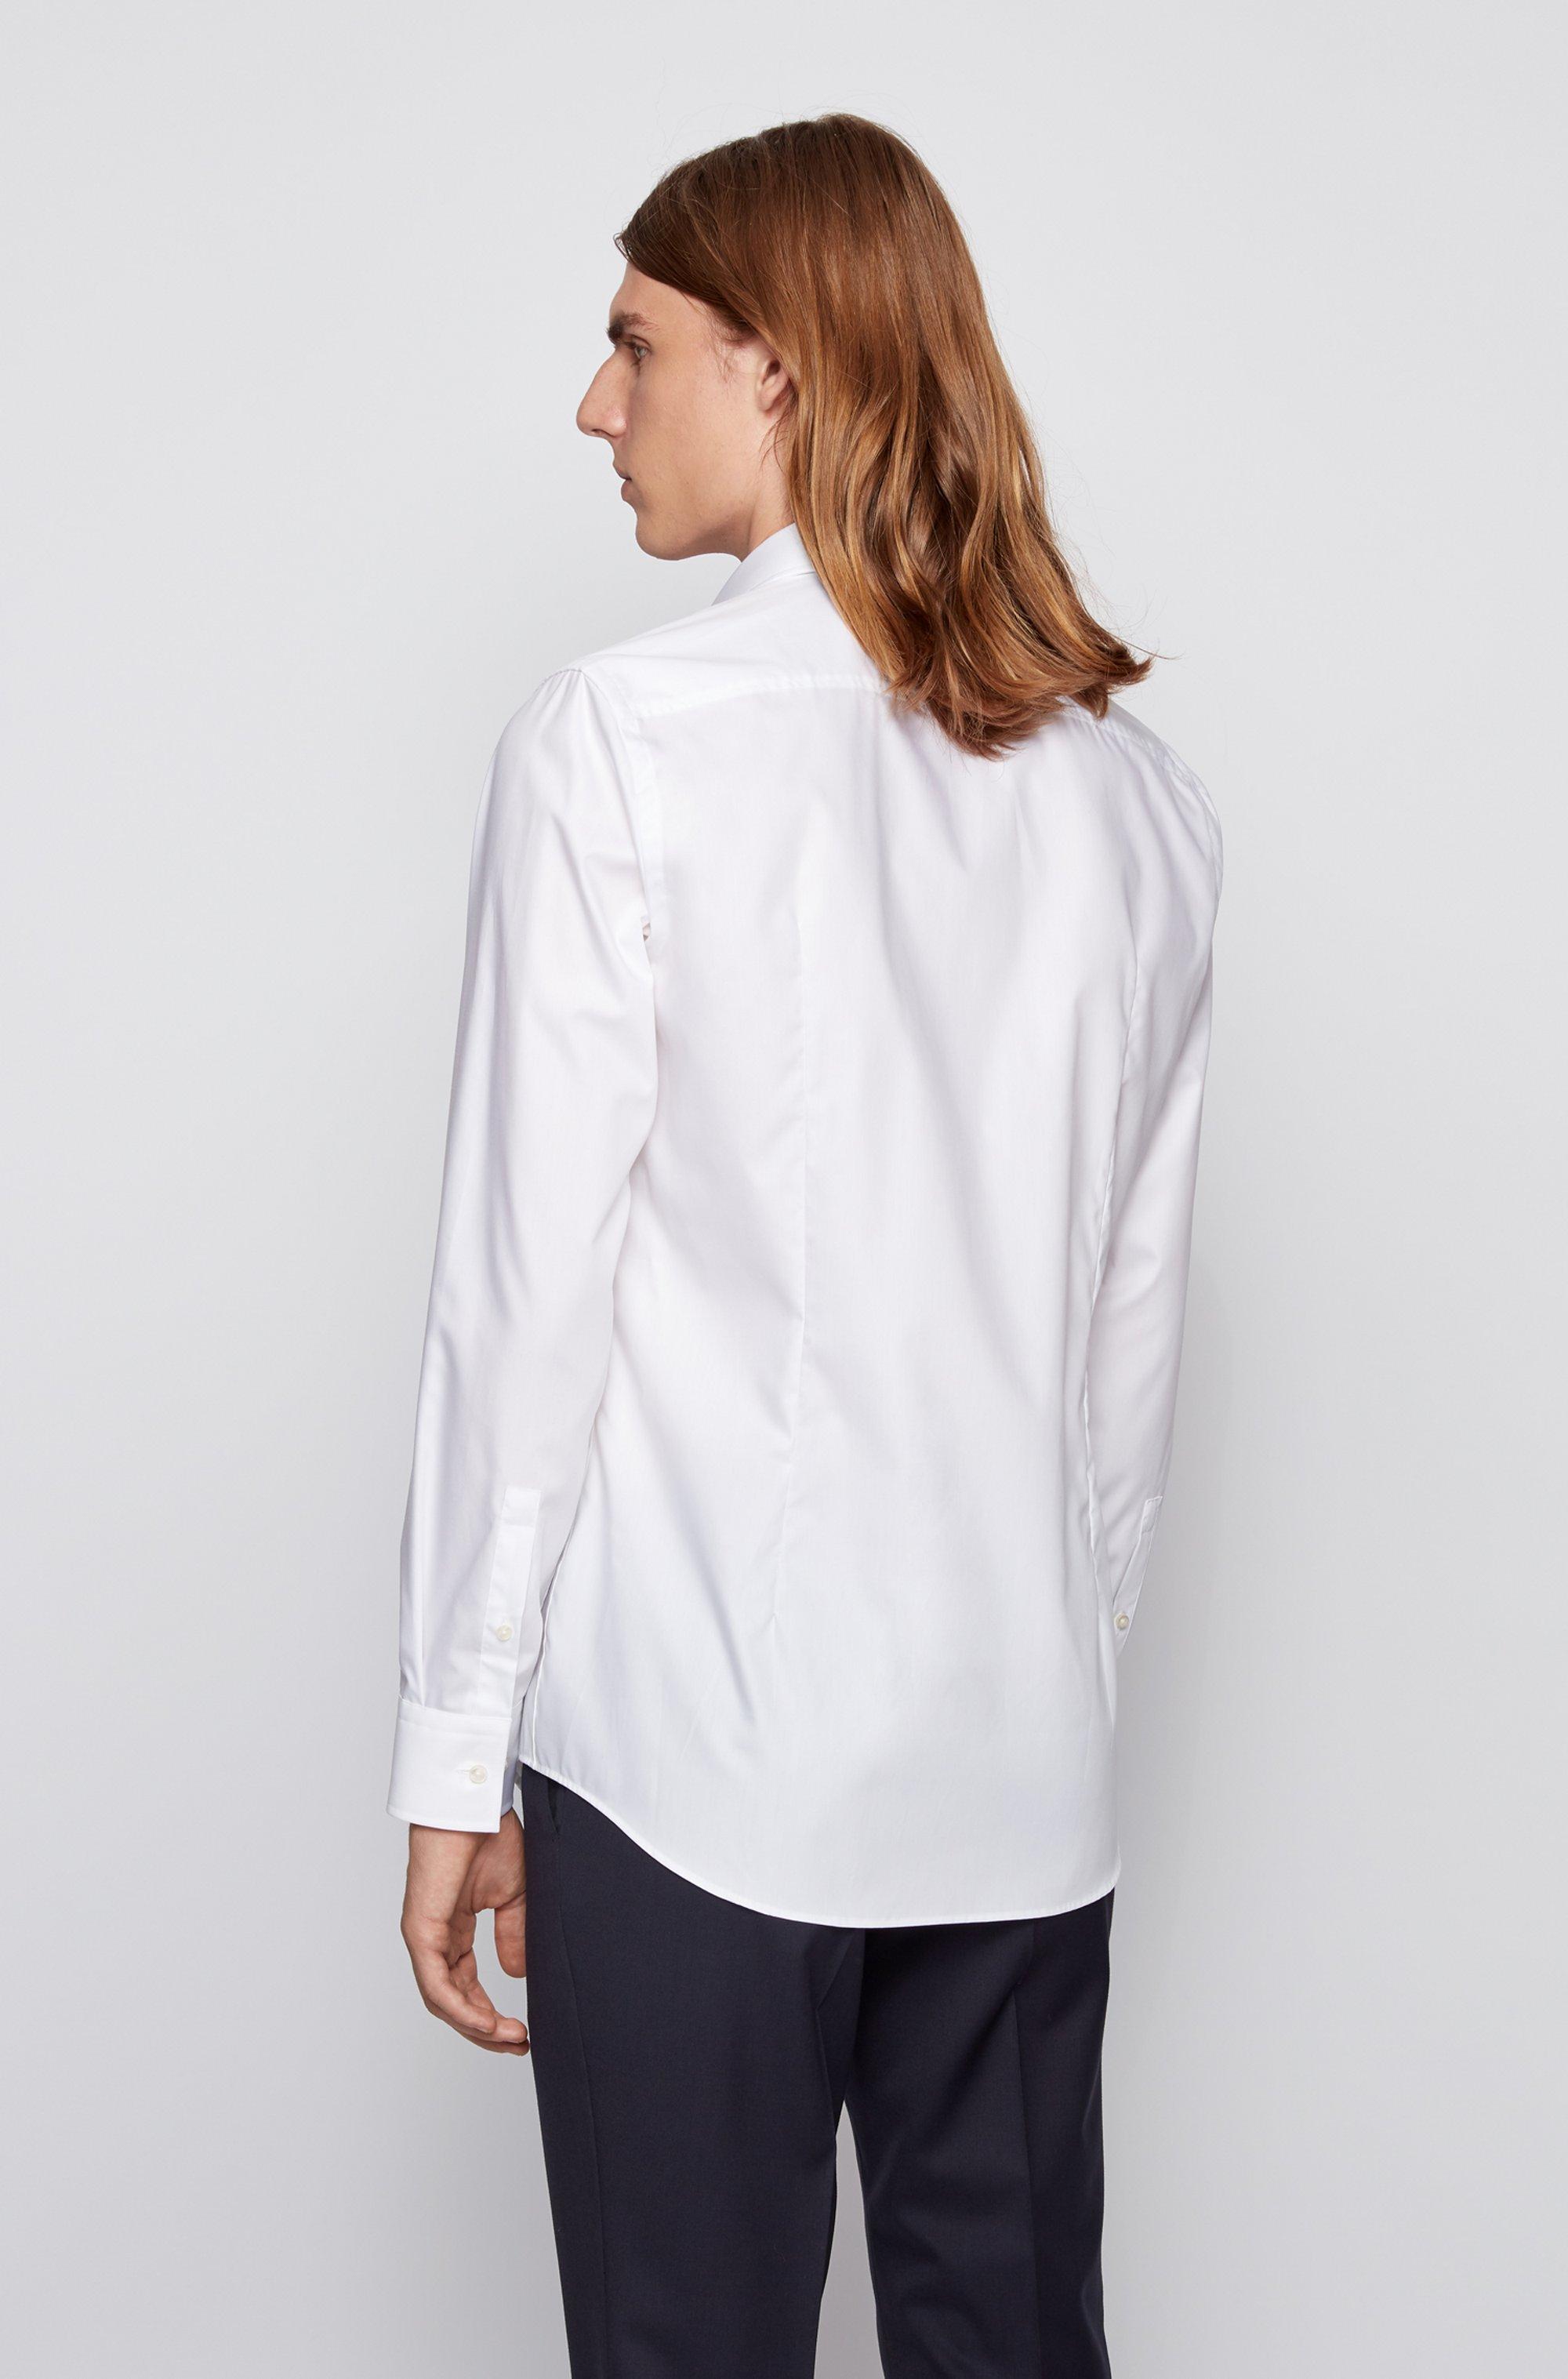 Hugo Boss Slim-fit Business Shirt Cotton Poplin White 15in Collar £89